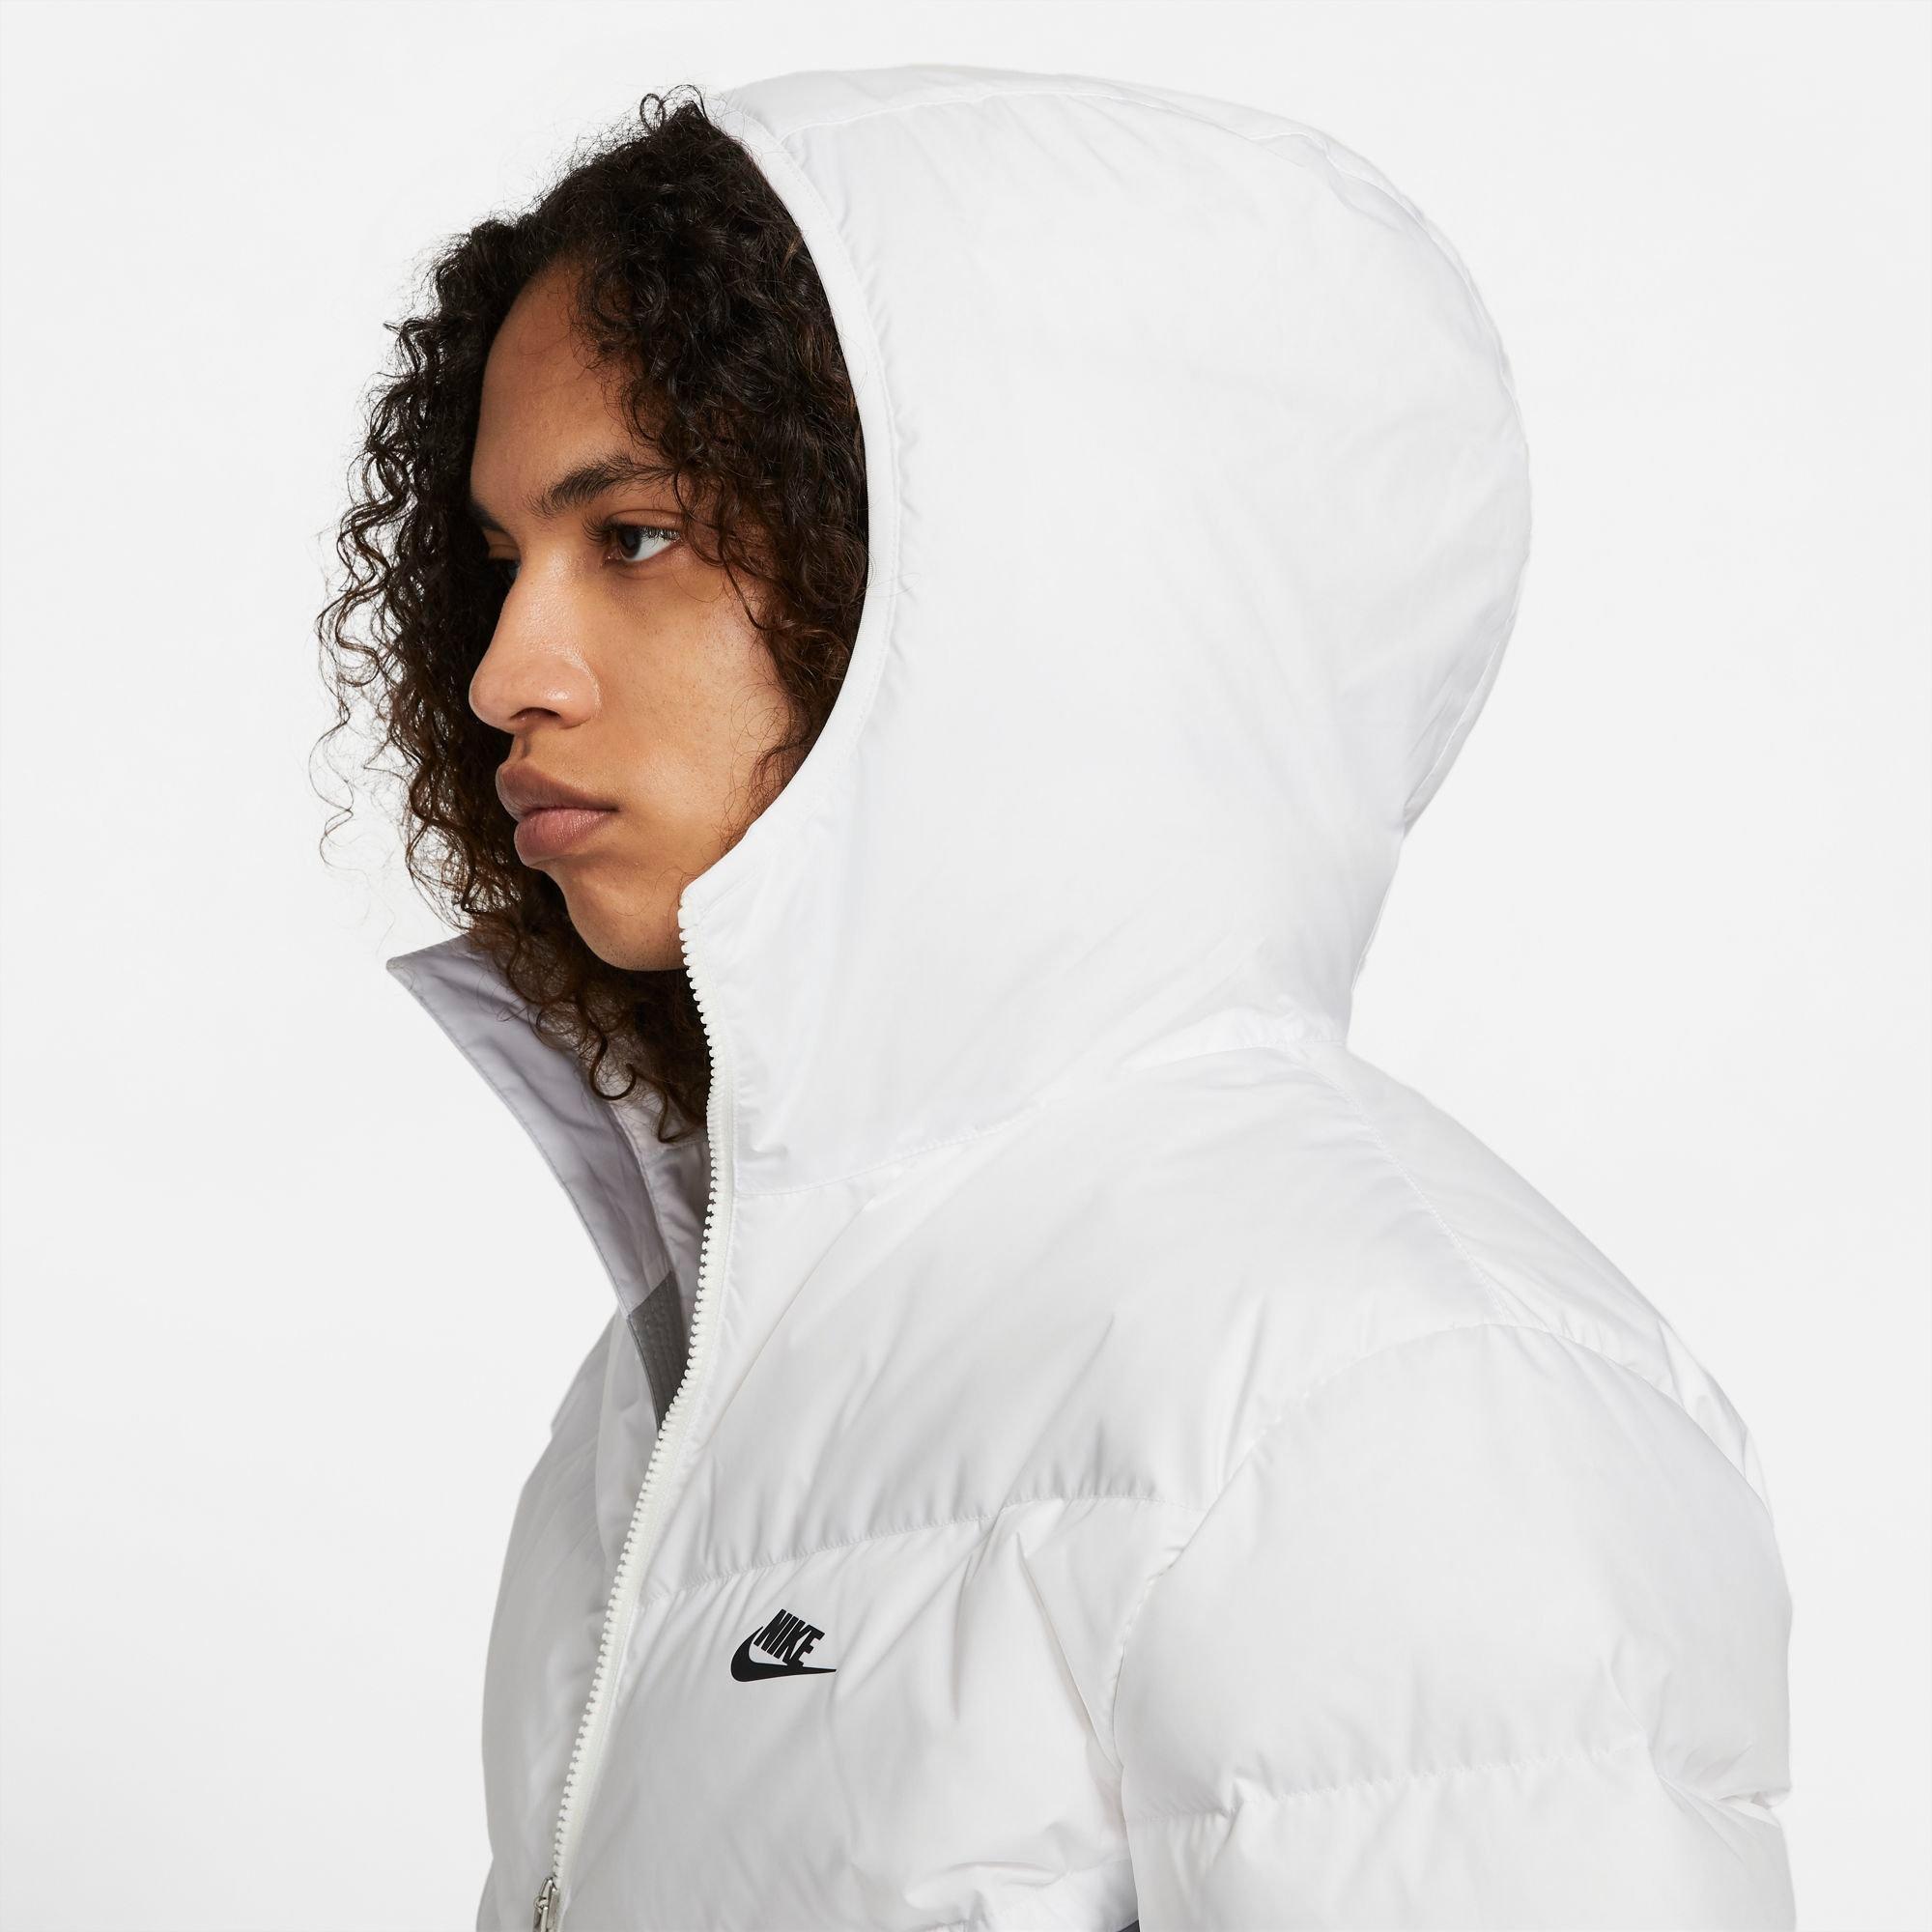 Nike Sportswear Storm-FIT Windrunner Hooded Jacket - White/Grey